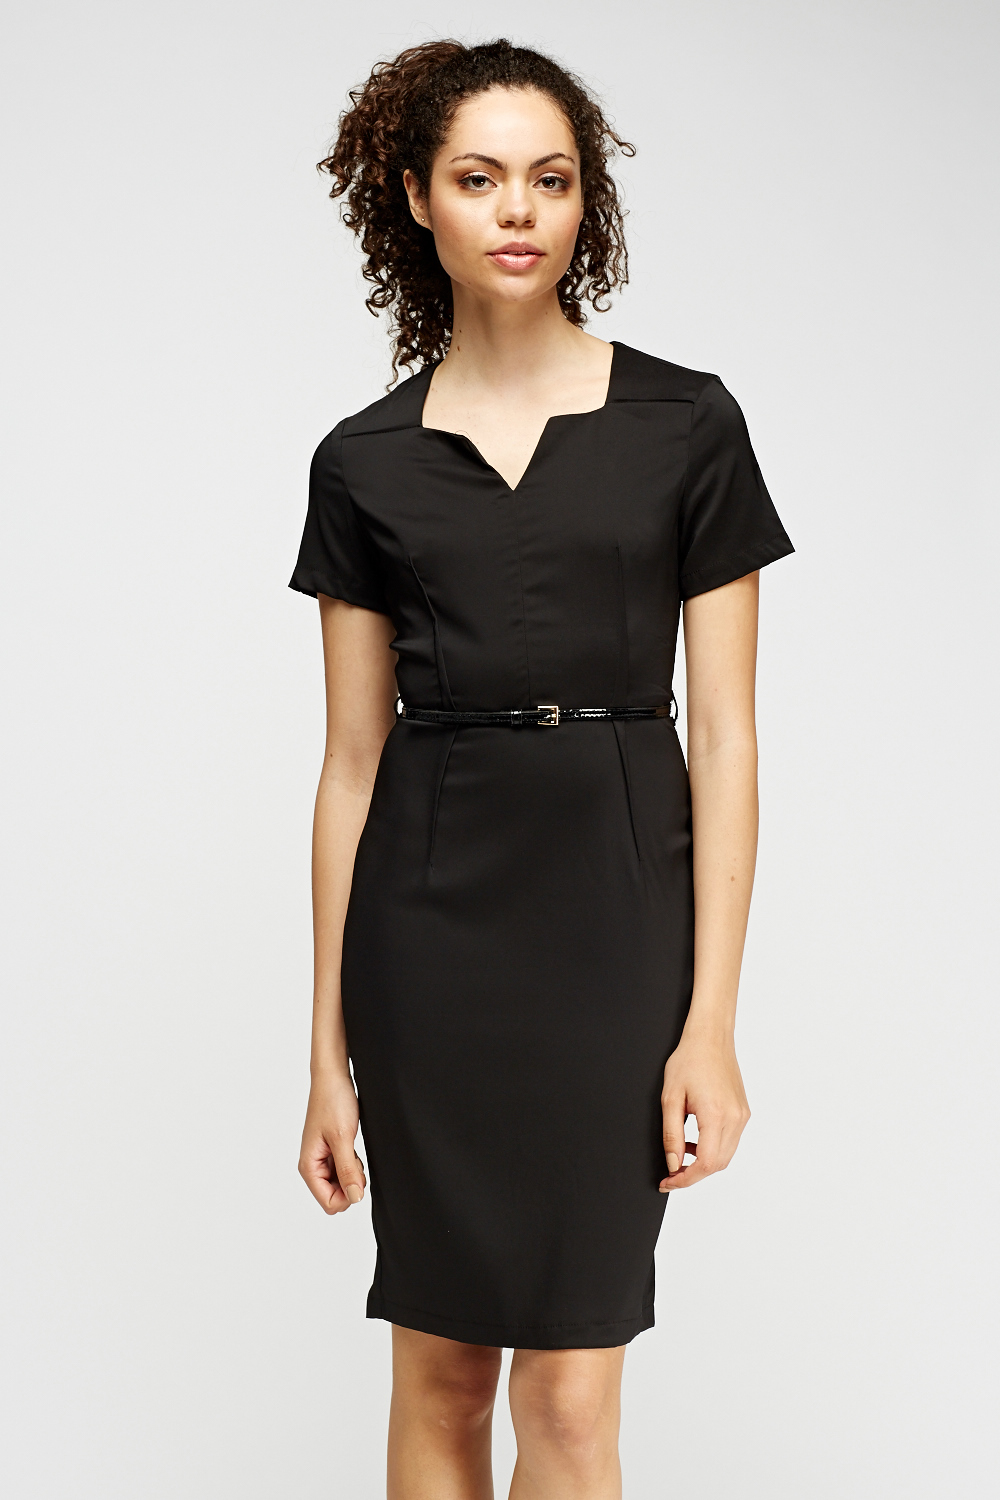 Black Pencil Belted Dress - Just $6